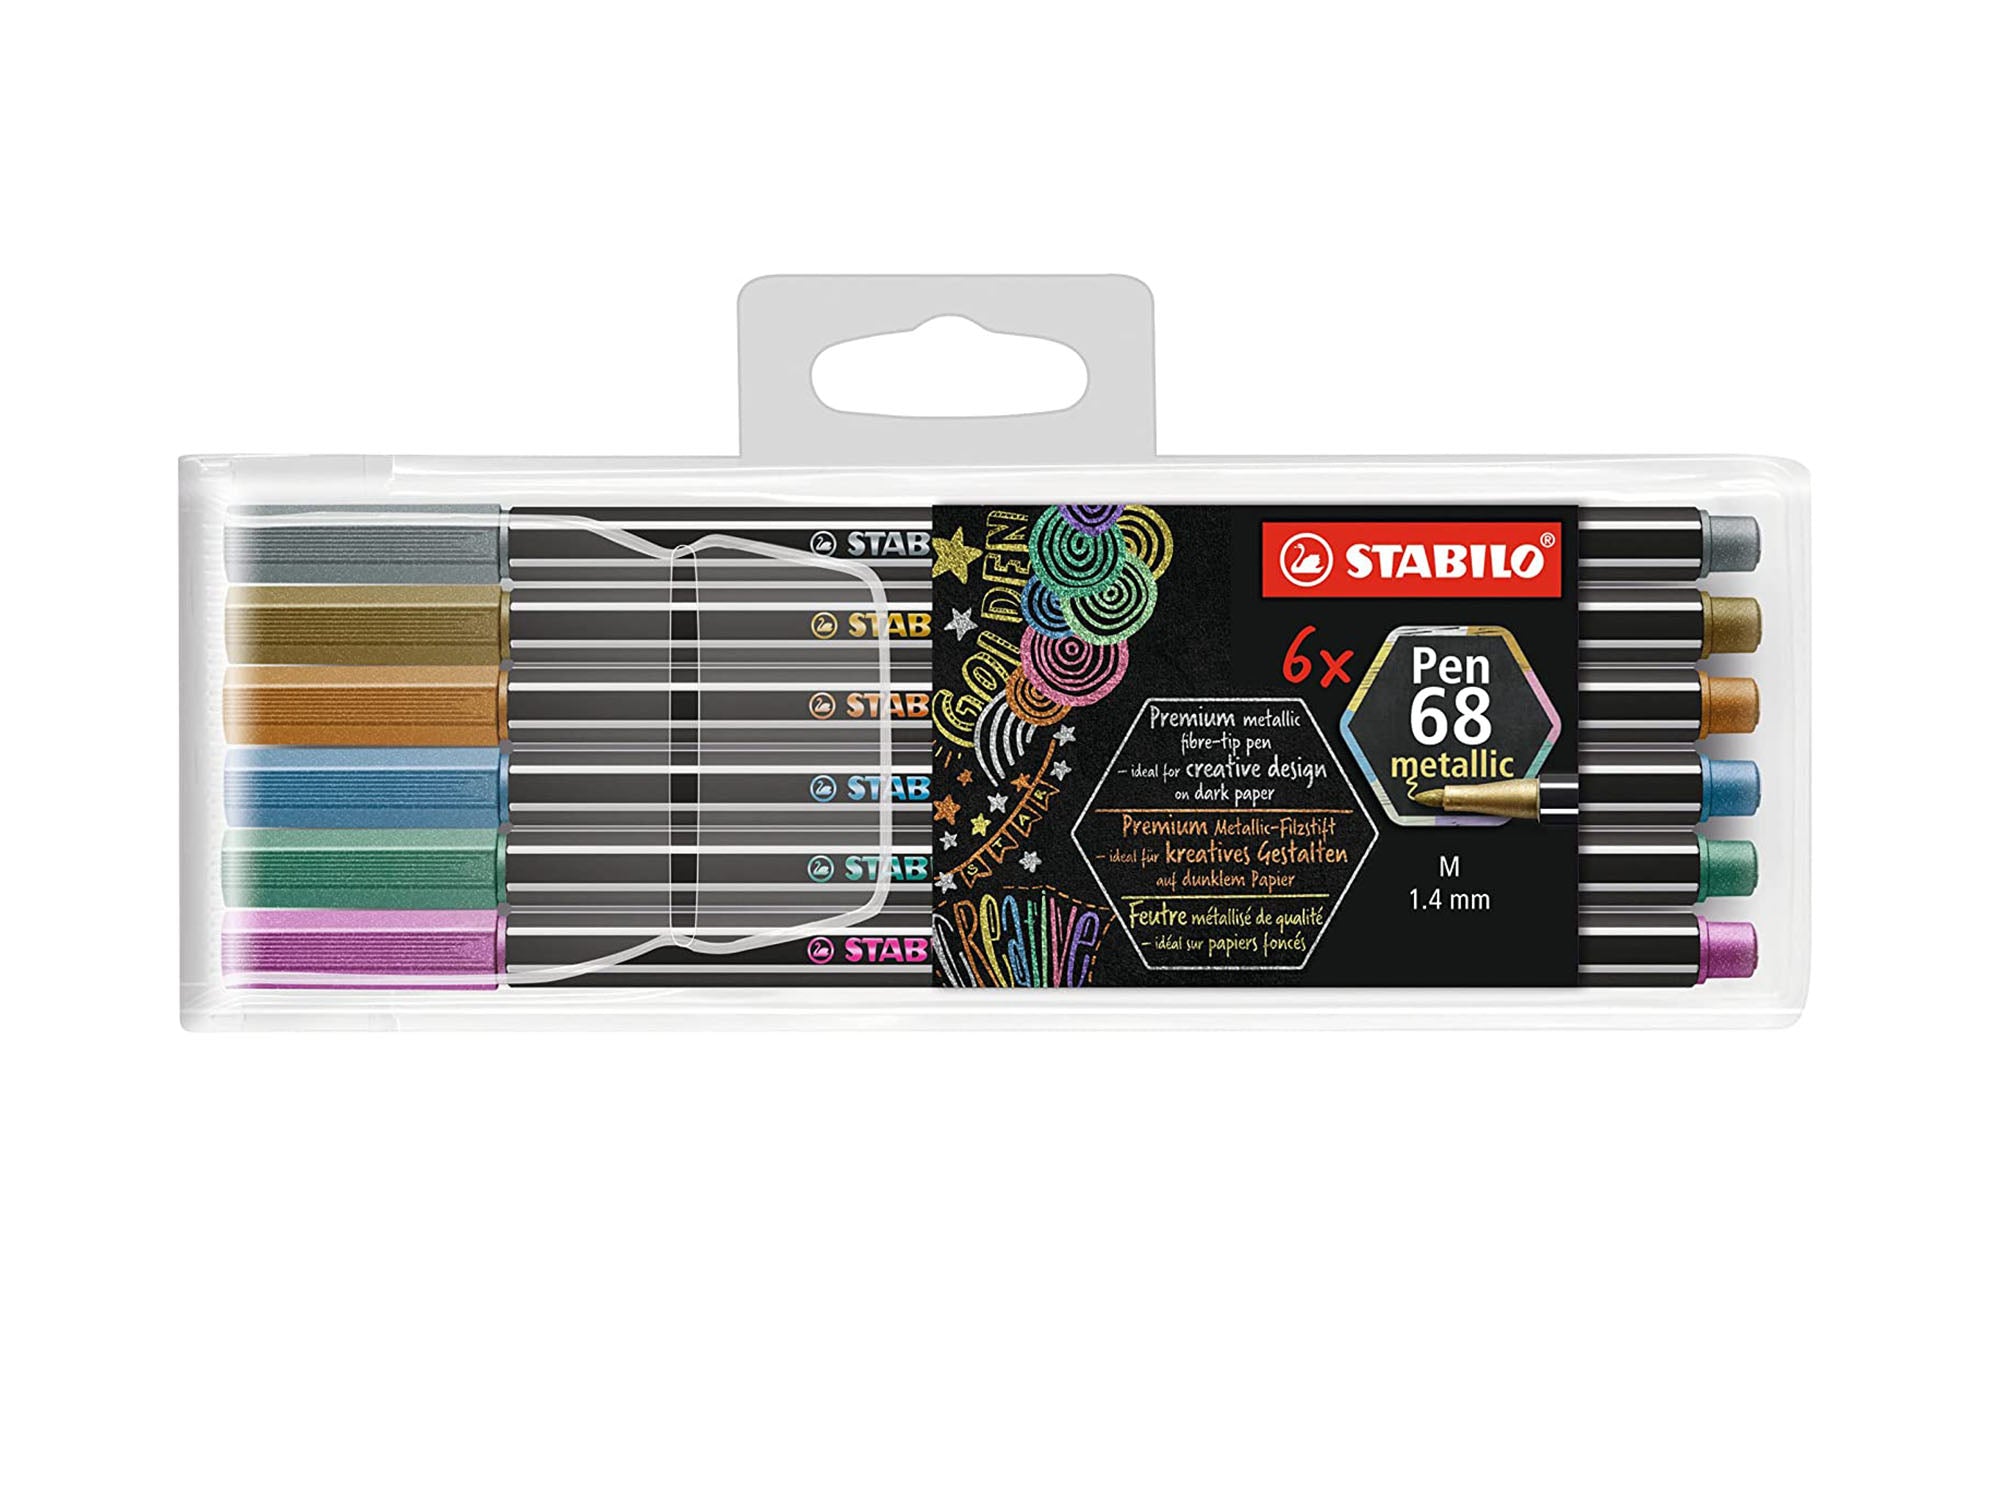 Premium felt-tip pen STABILO Pen 68 - pack of 10 colors